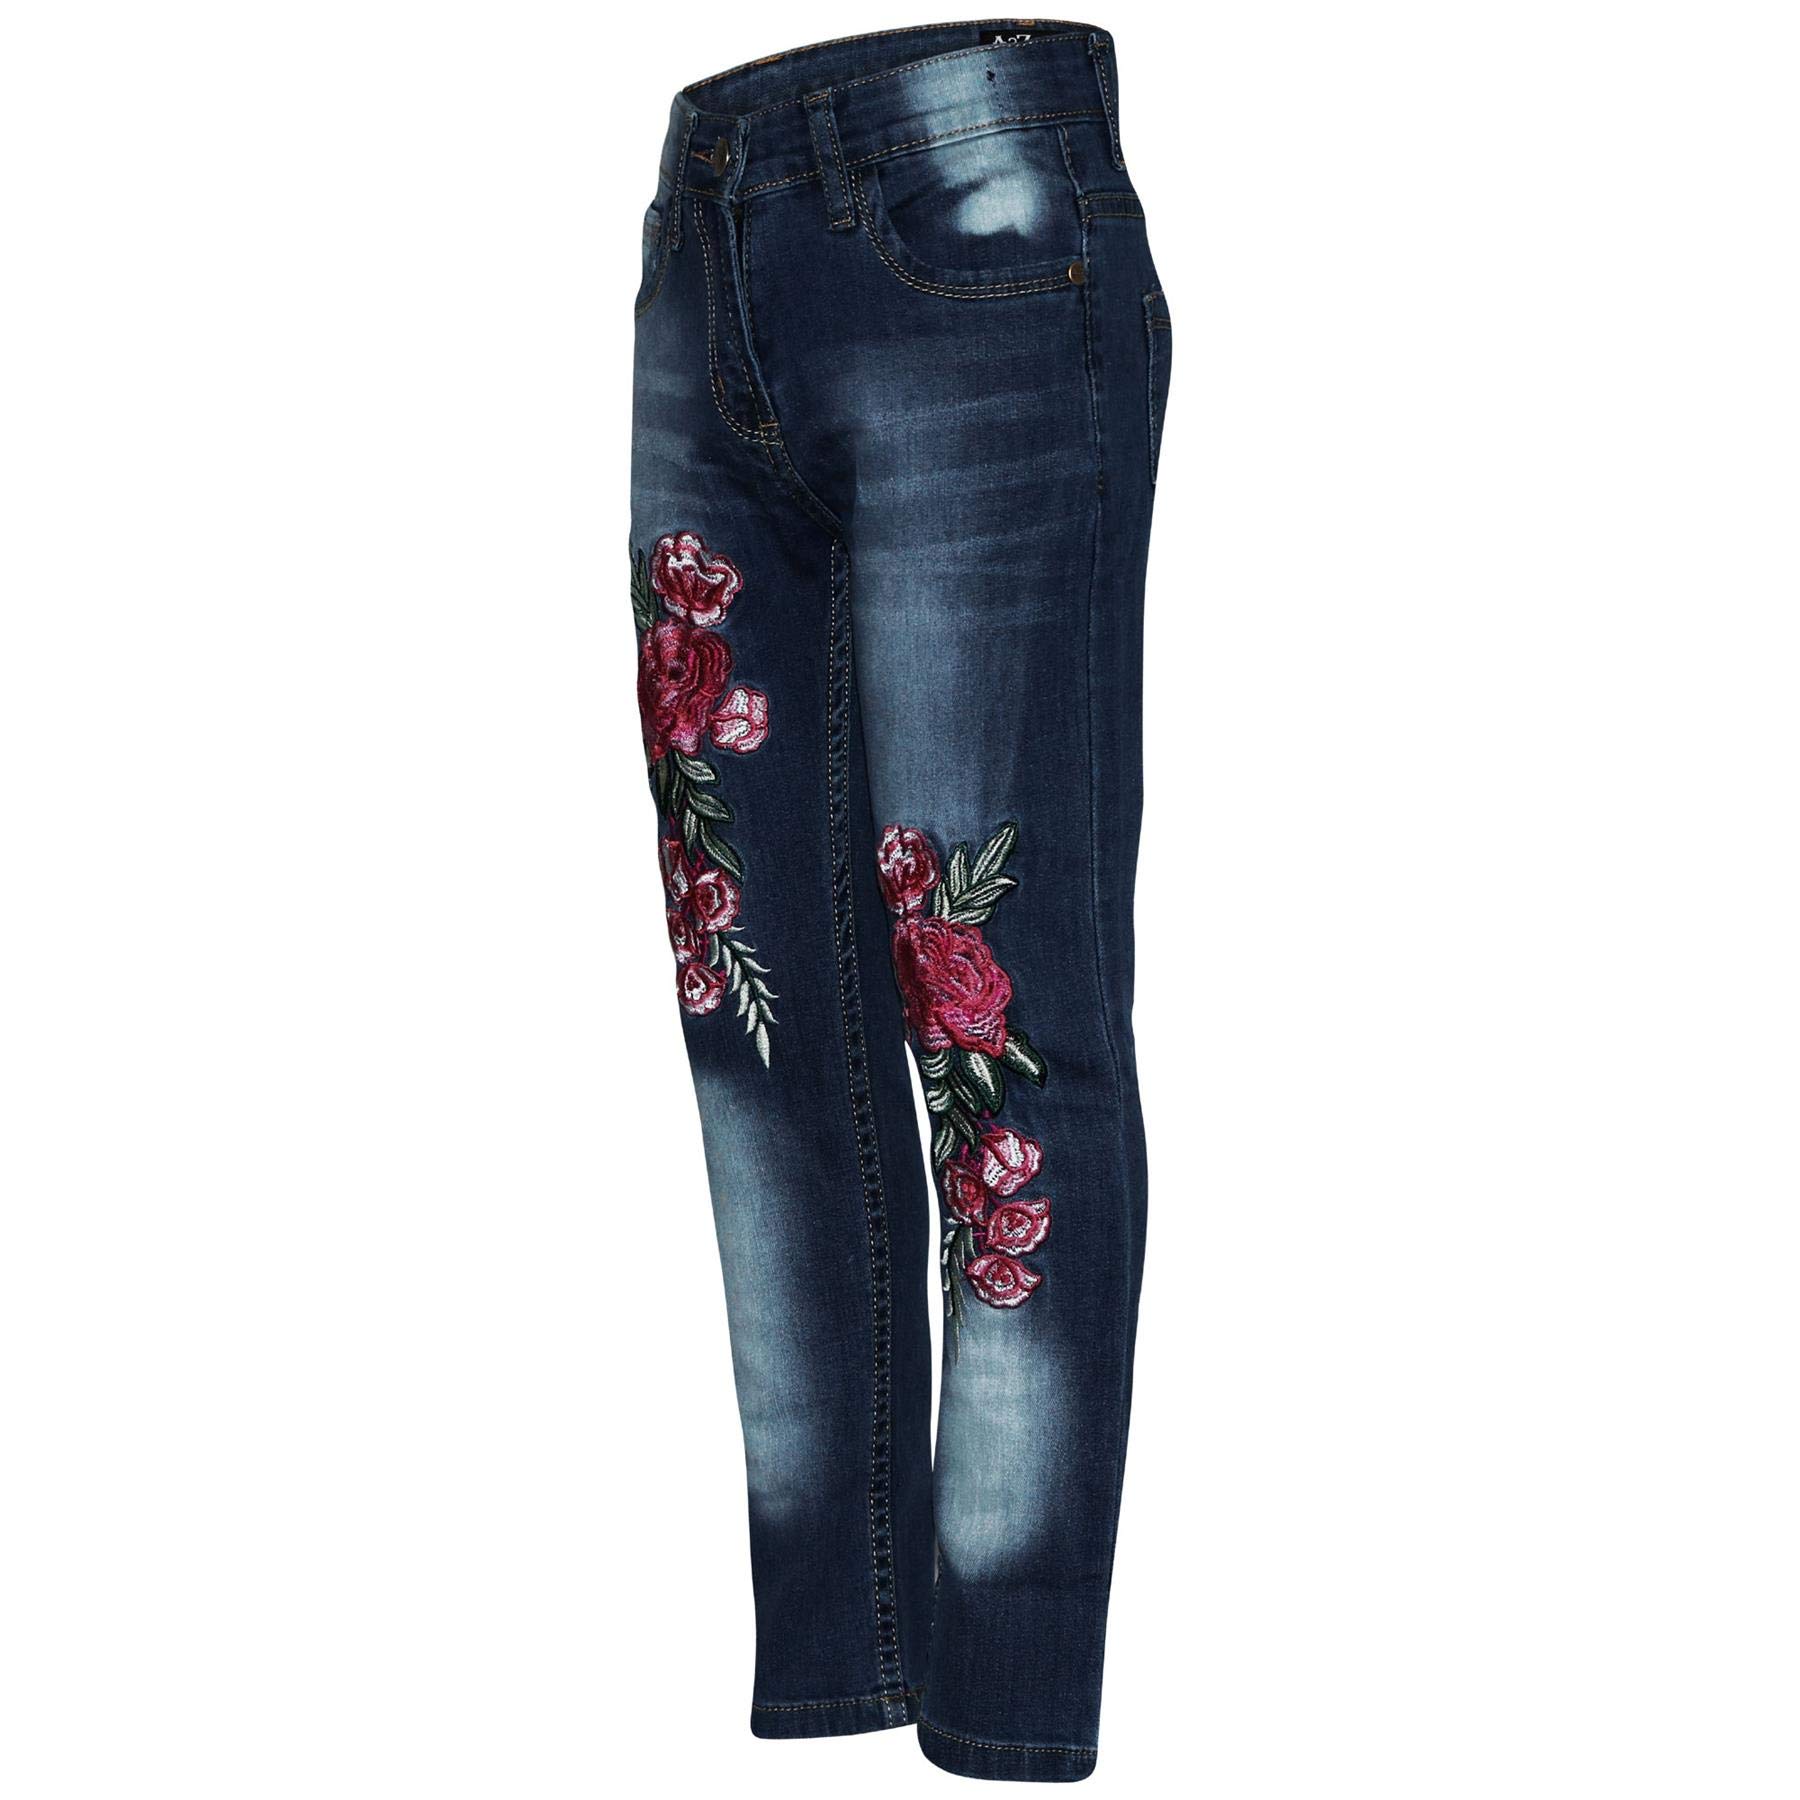 A2Z Kids Girls Stretchy Jeans Designer Rose Embroidered Denim Pants Trousers Jegging